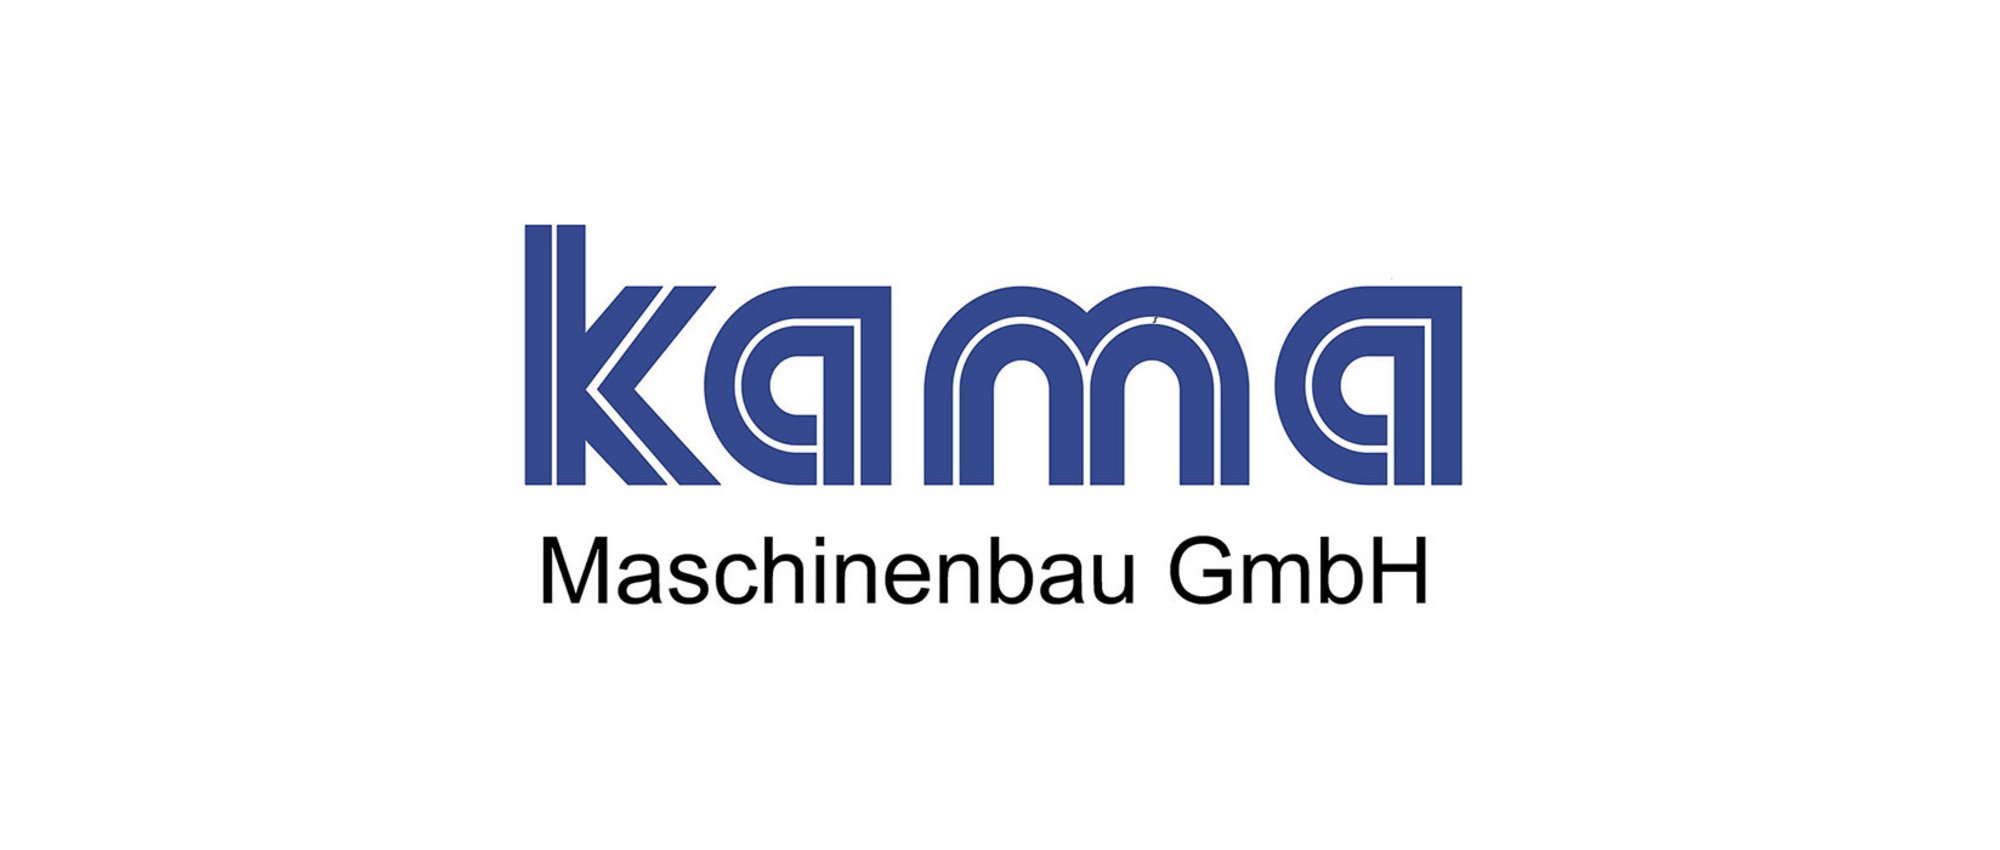 Logo Kama